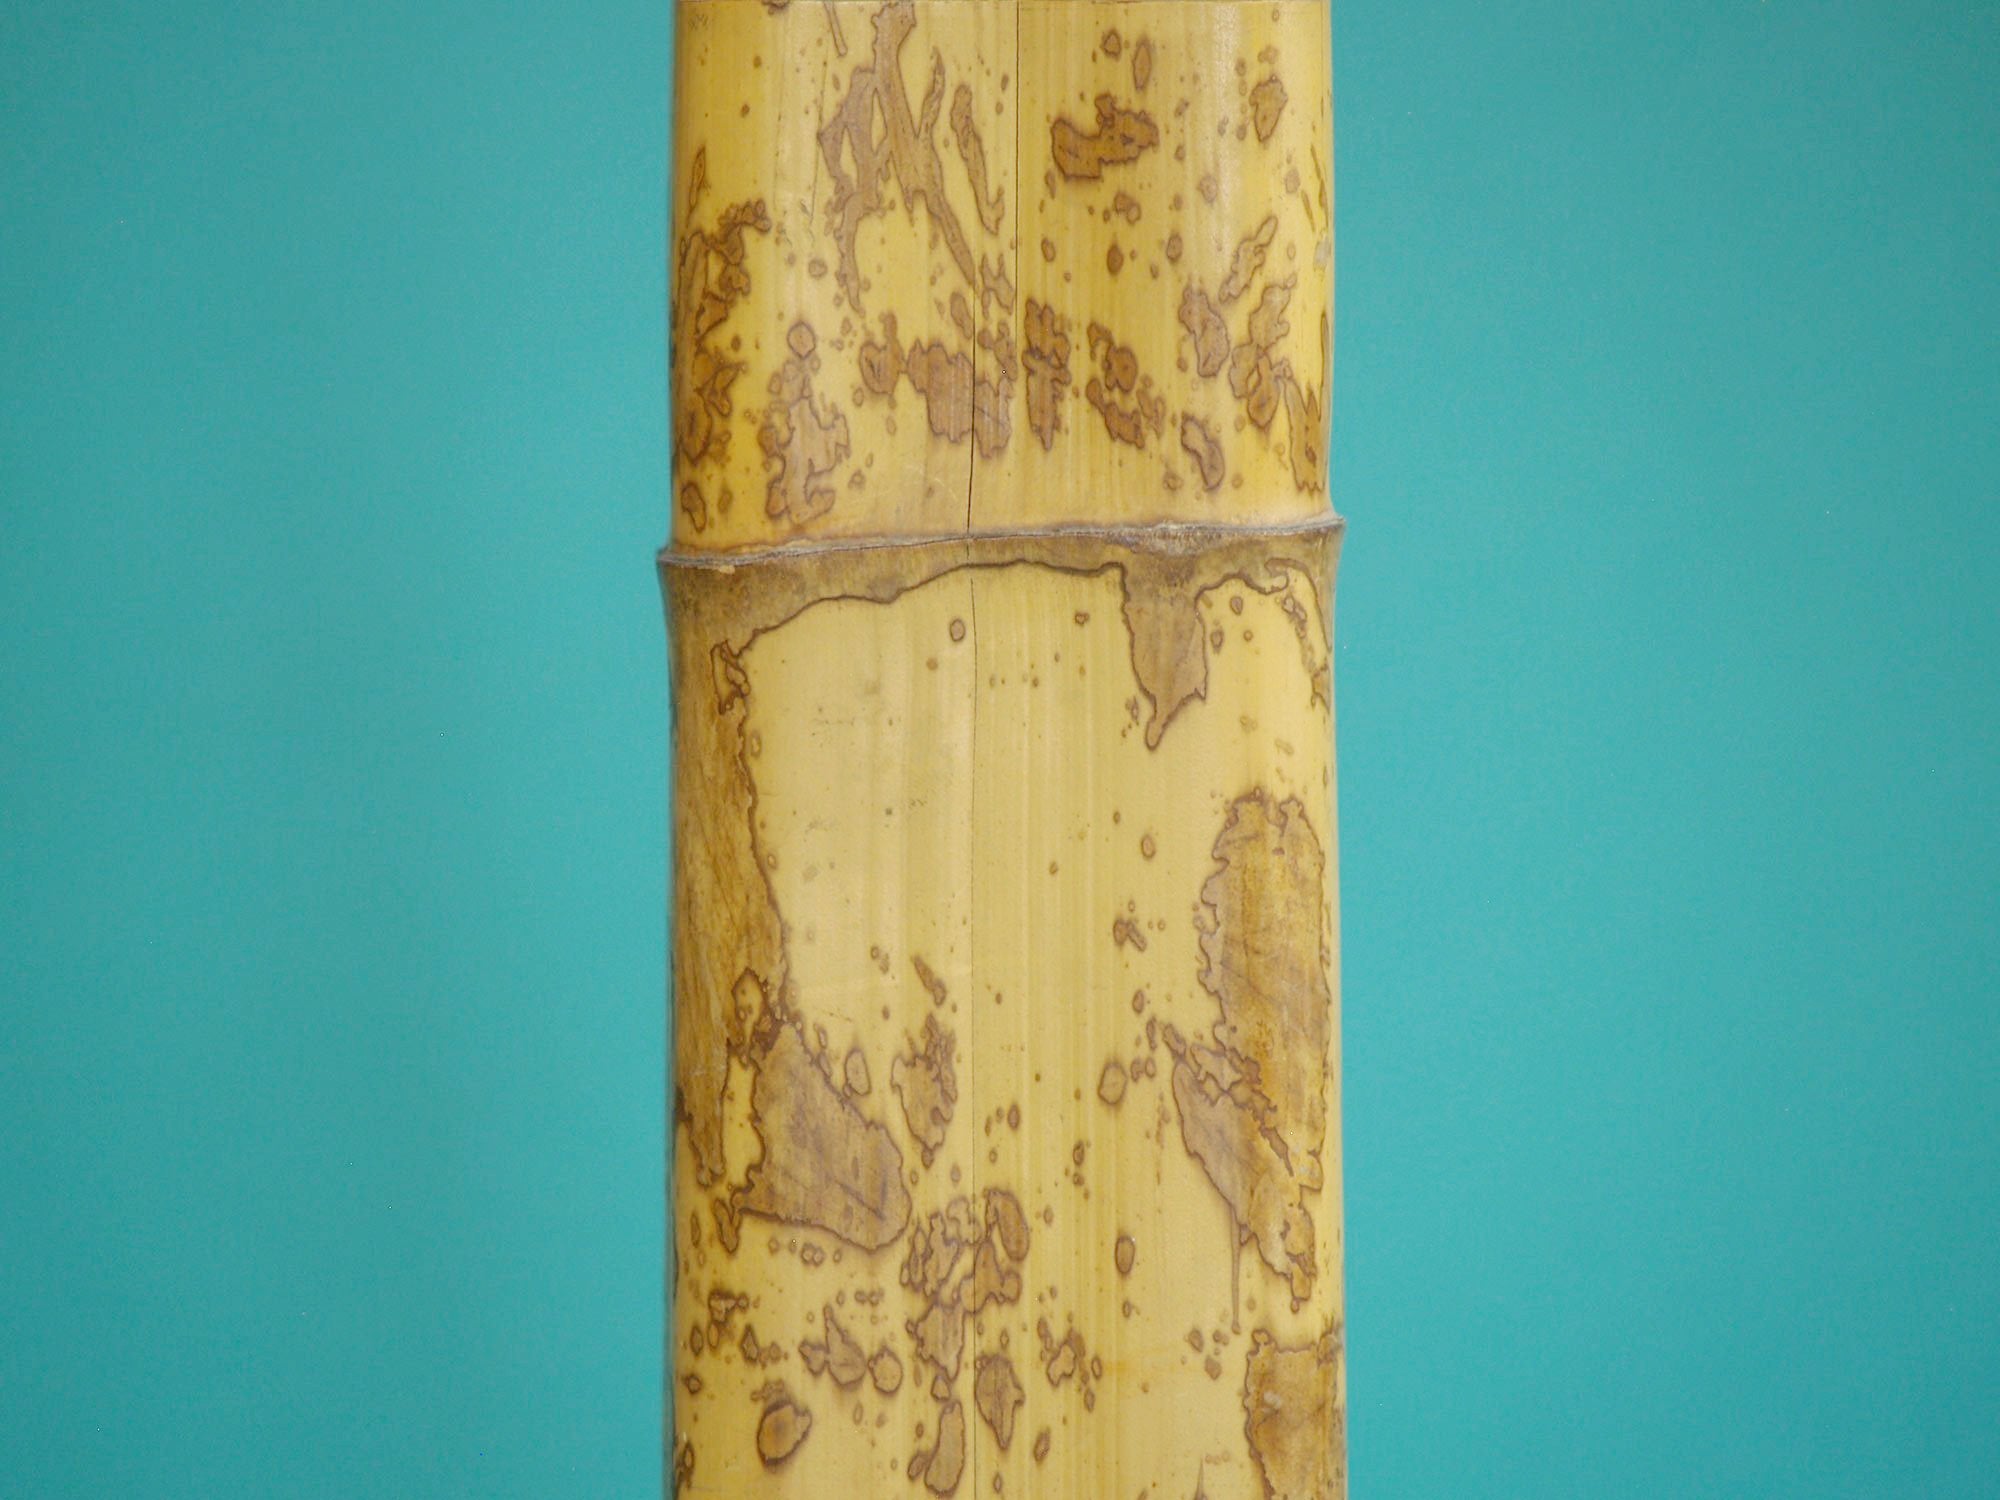 Takehanaire, vase en bambou torachiku pour la cérémonie du thé, Japon (Fin ère Meiji / début ère Shōwa)..Takehanaire, Torachiku Bamboo vase for tea ceremony chabana, Japan (Late Meiji era / Early Shōwa era)